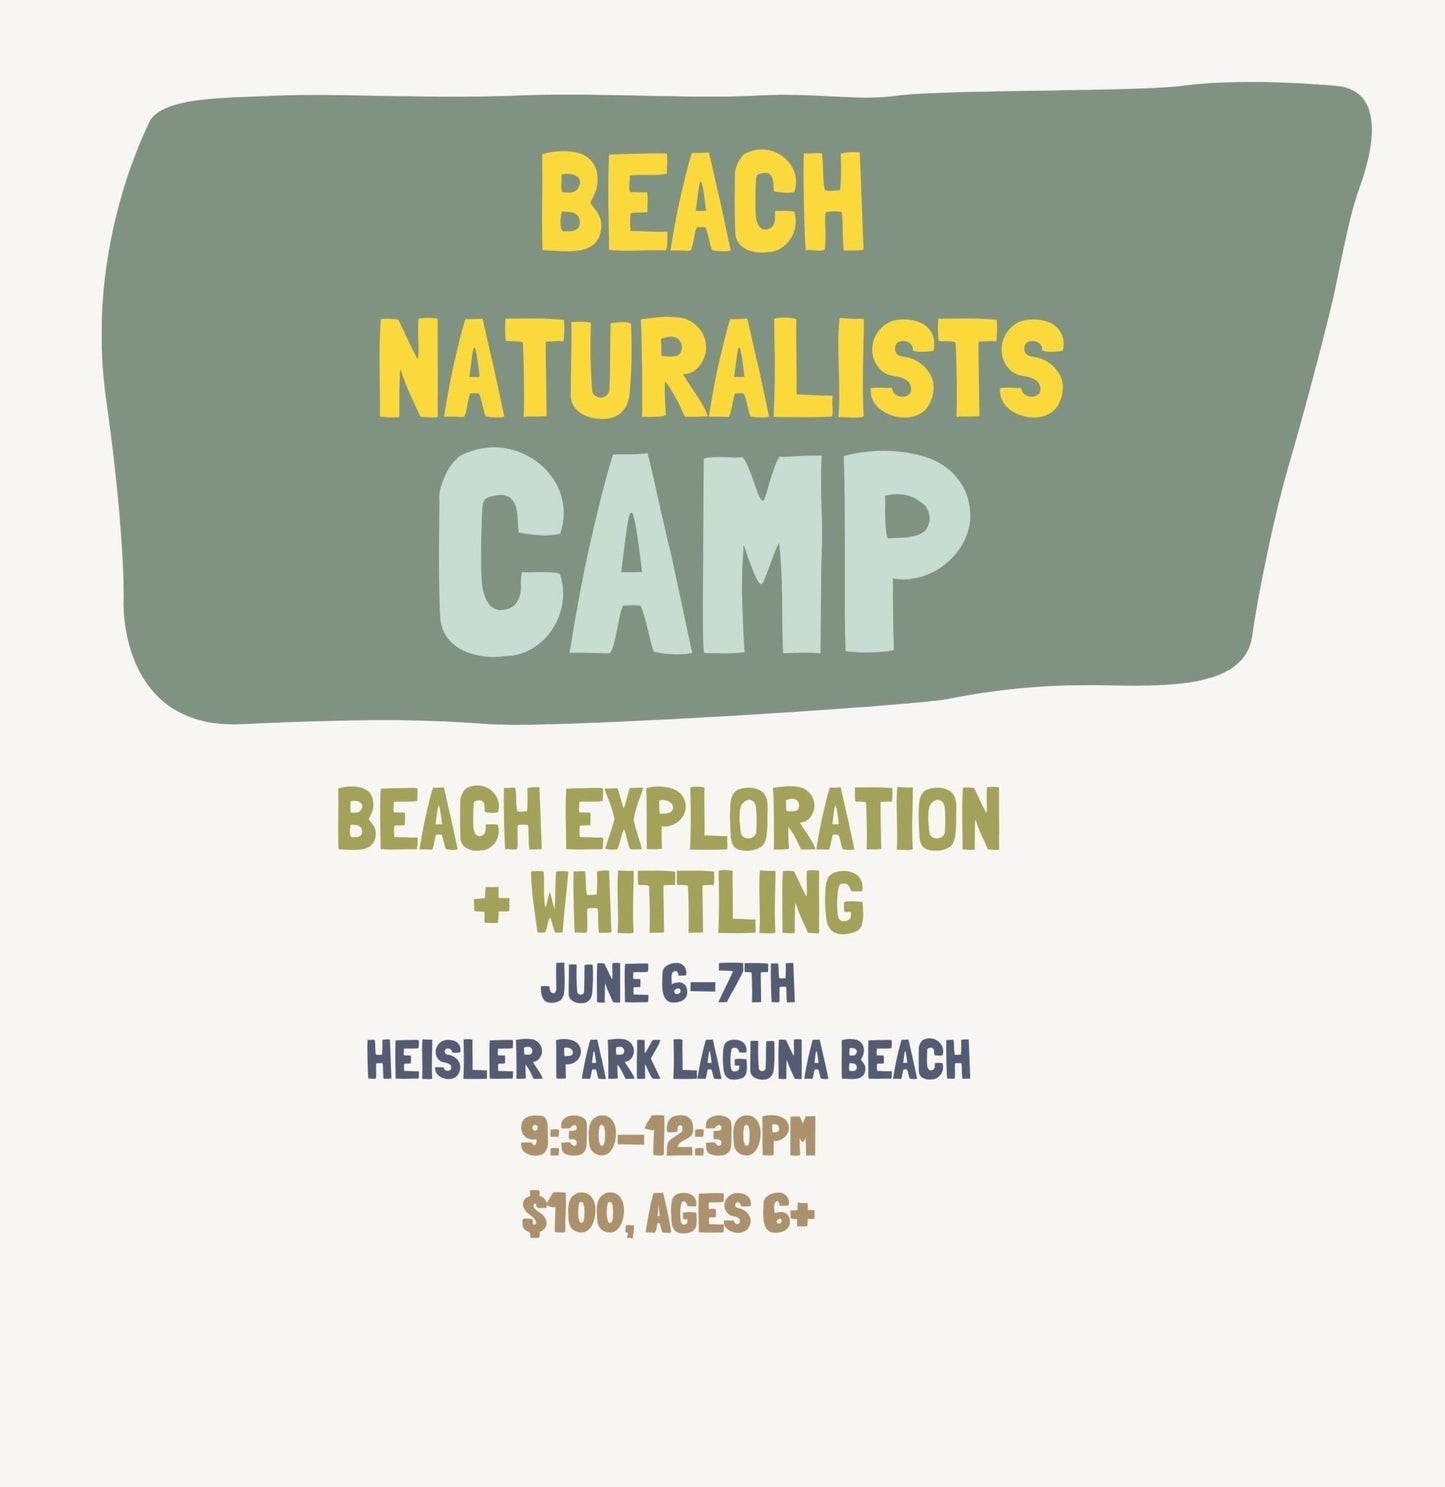 Beach Naturalists Camp JUNE